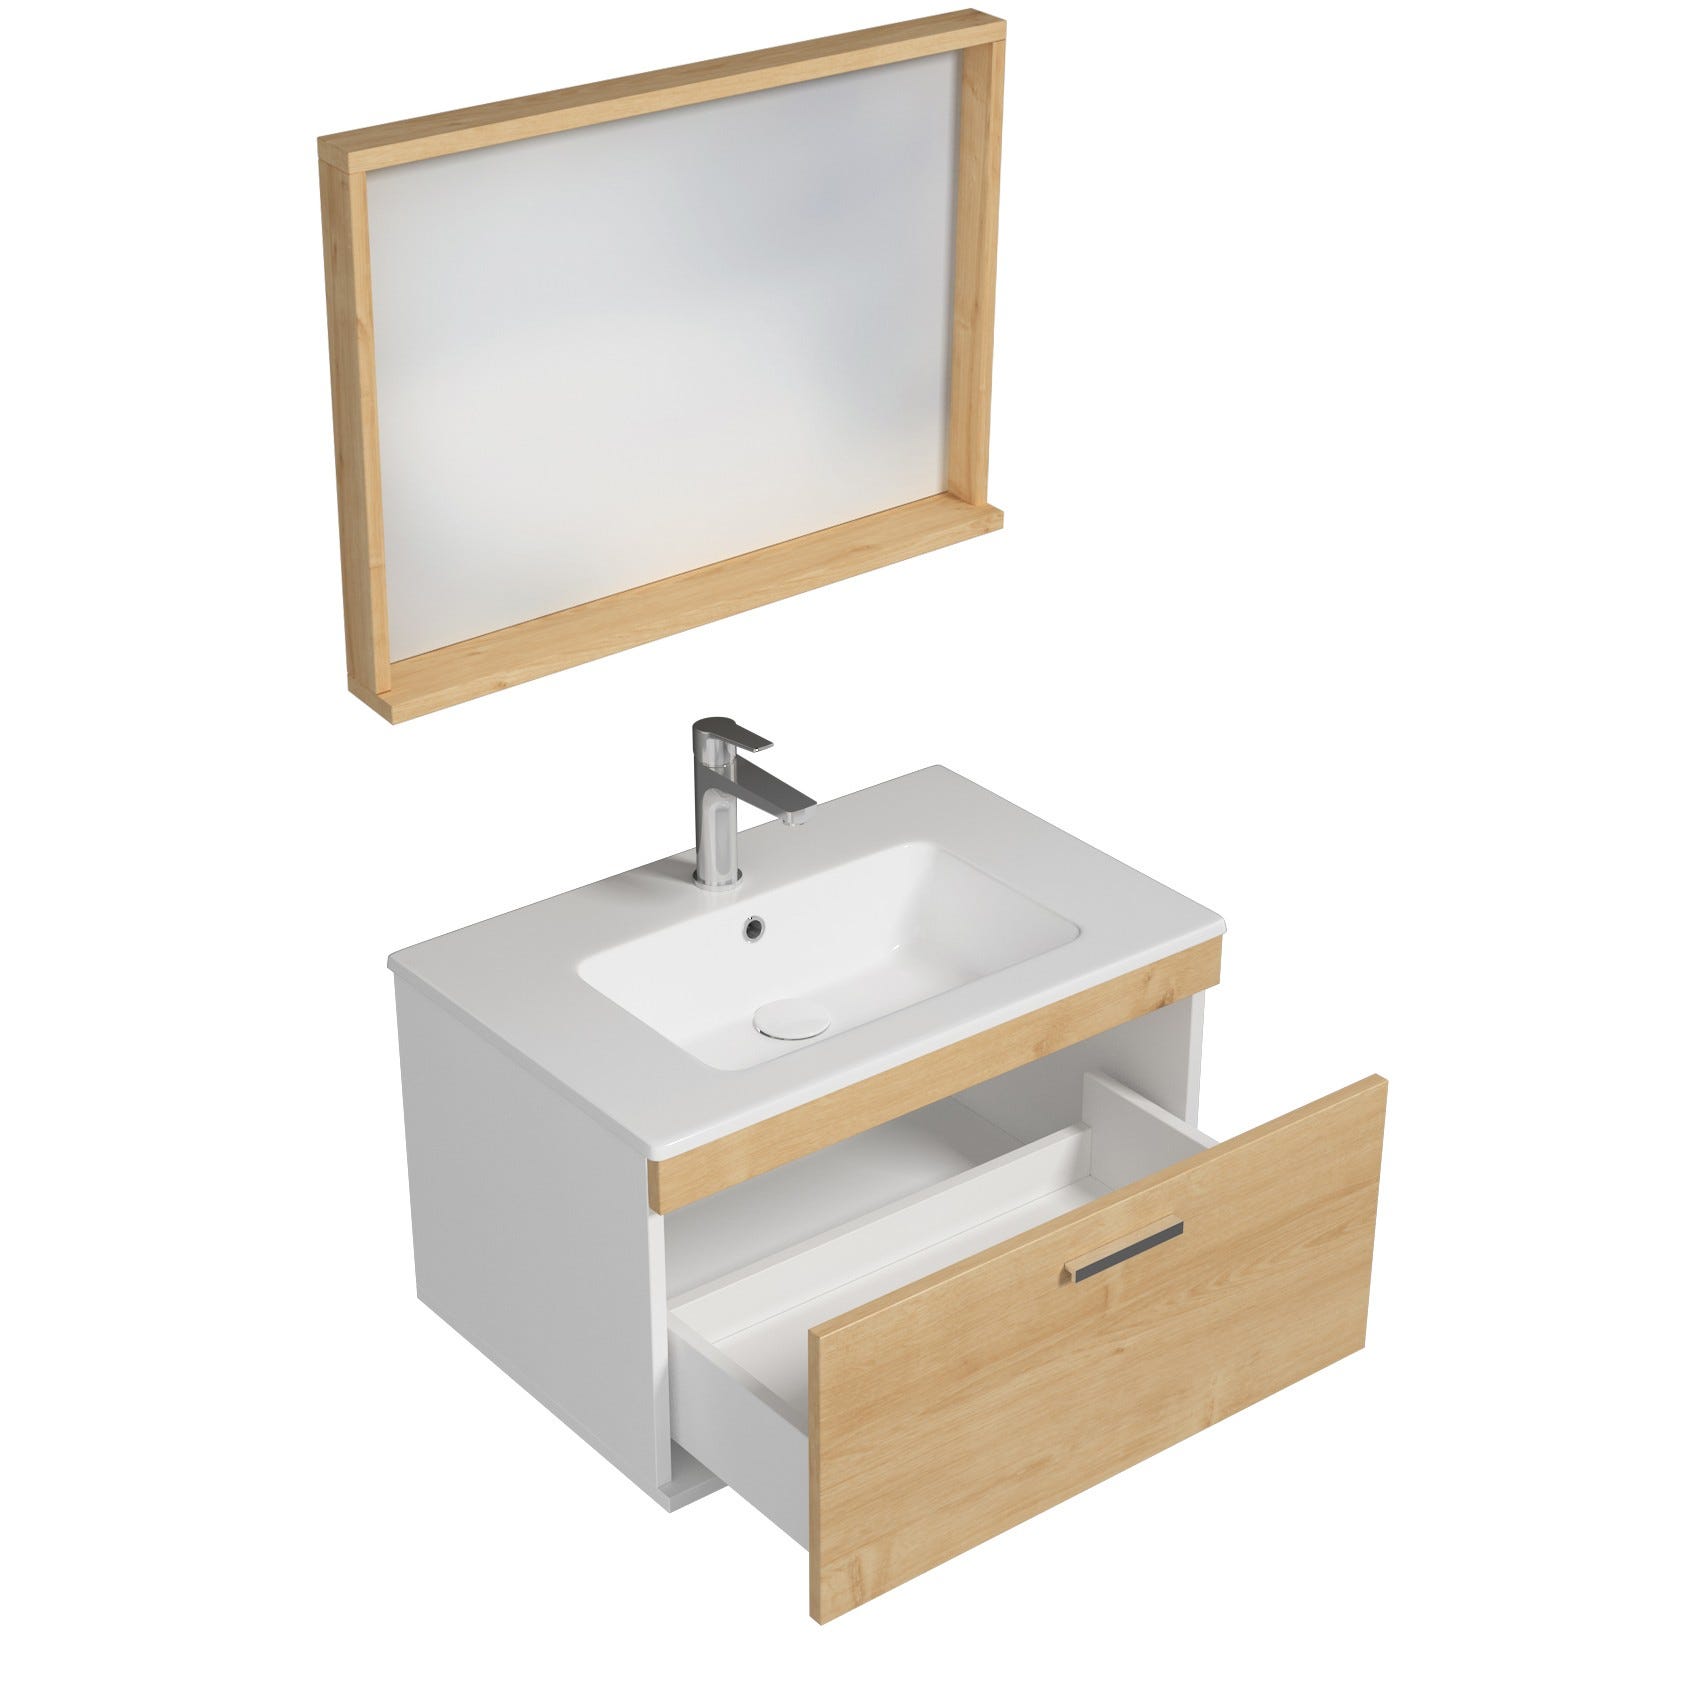 RUBITE Meuble salle de bain simple vasque 1 tiroir chêne clair largeur 70 cm + miroir cadre 2